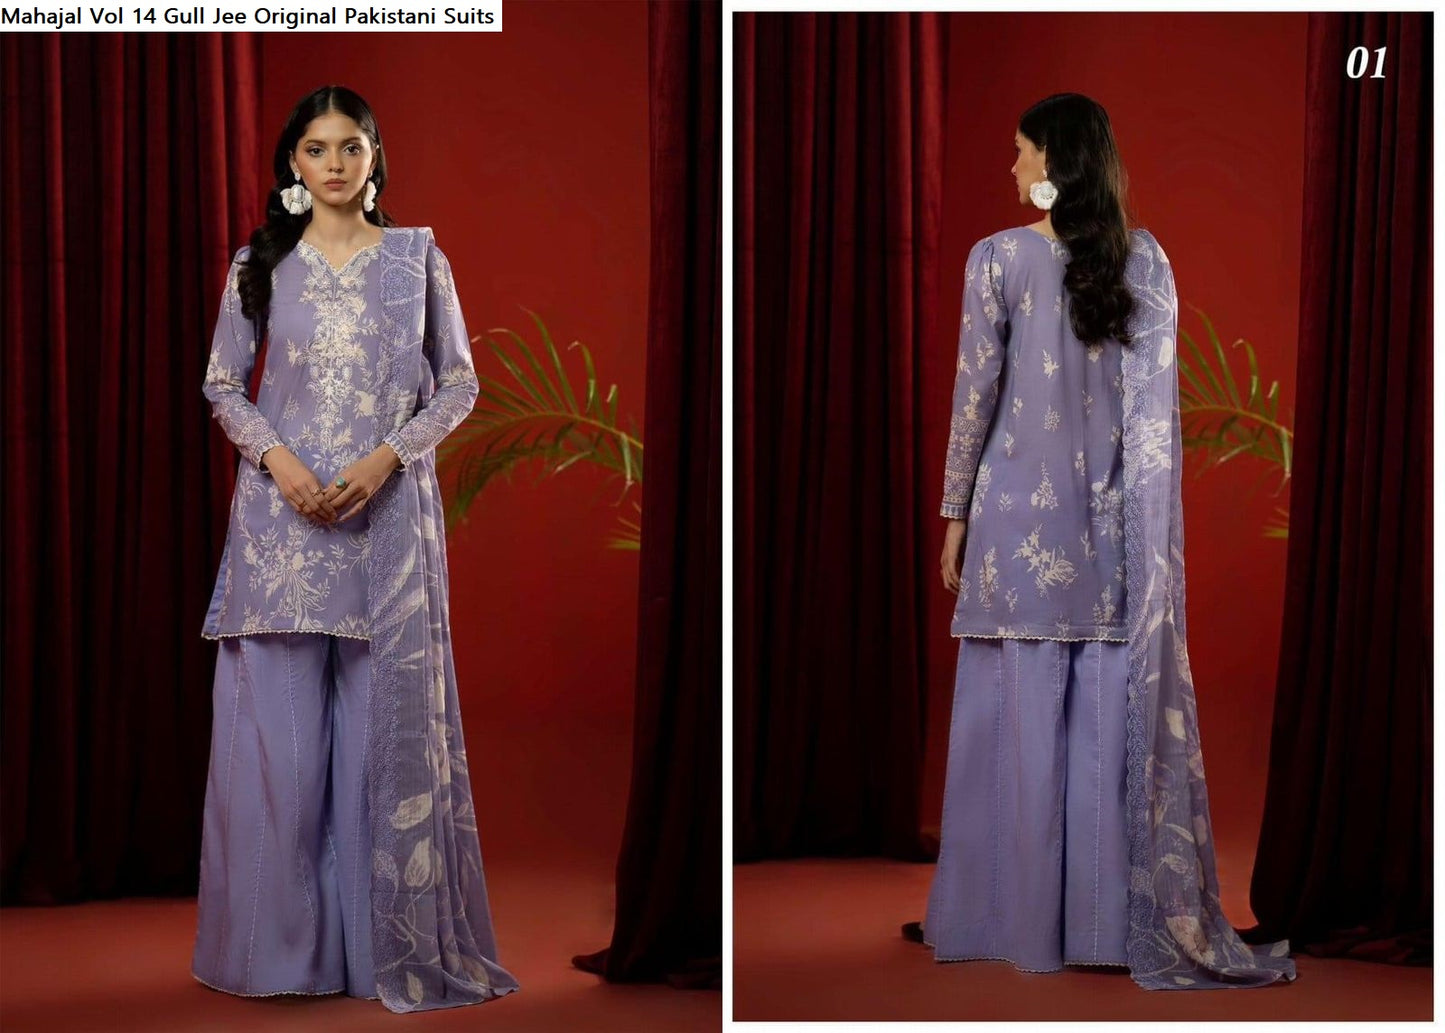 Mahajal Vol 14 Gull Jee Cambric Original Pakistani Suits